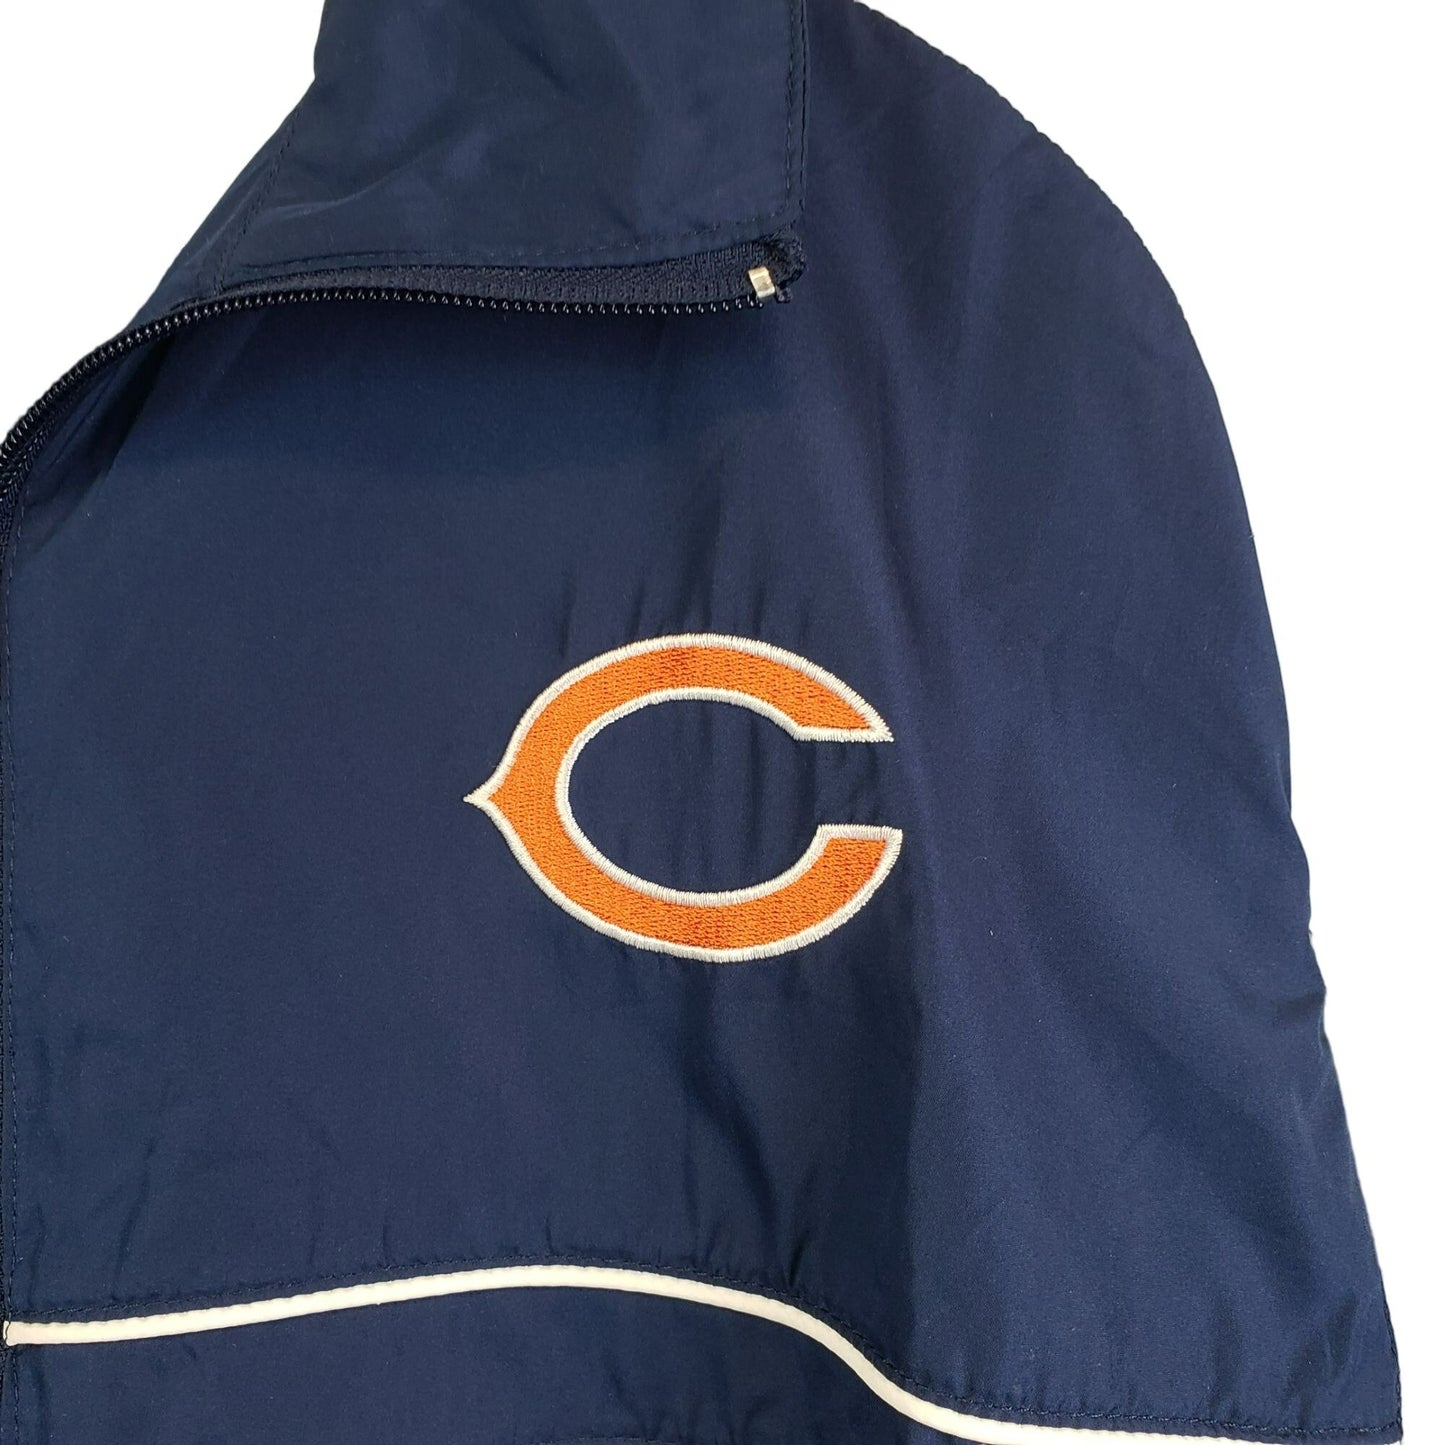 NFL x Sports Illustrated Chicago Bears Full Zip Windbreaker Jacket Size XL